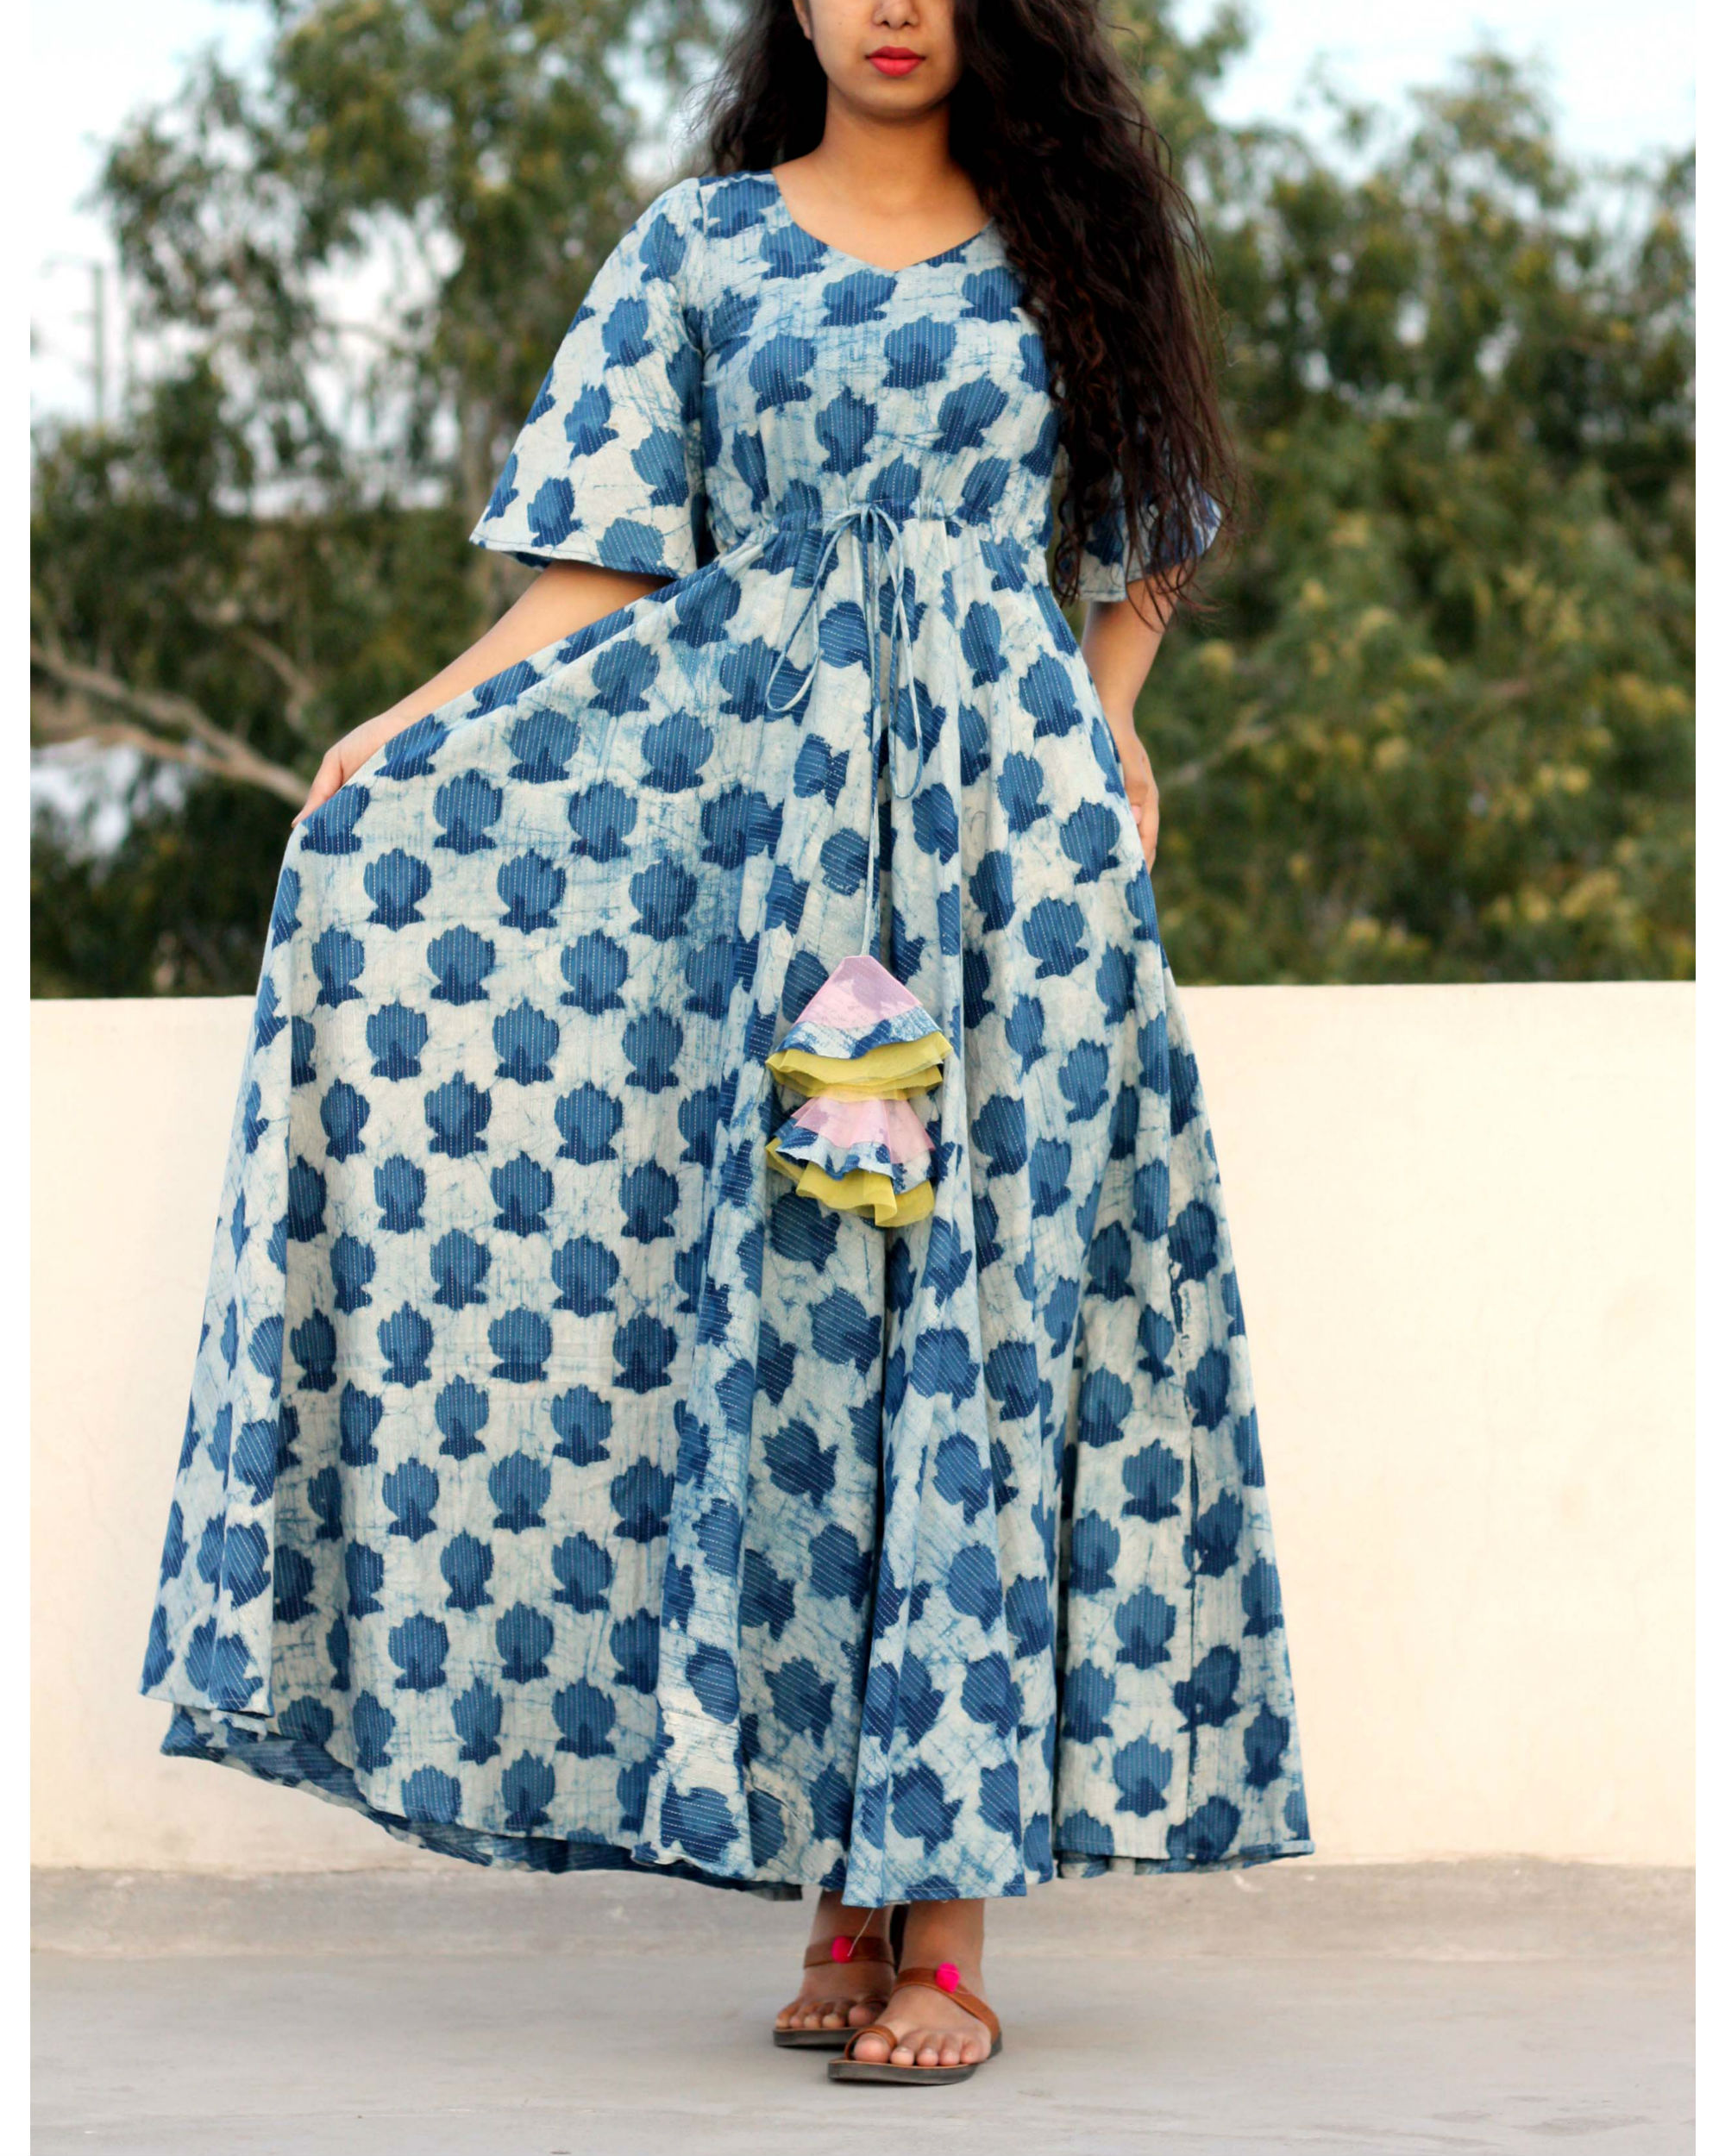 Indigo floral print maxi dress by Label Shivani Vyas | The Secret Label